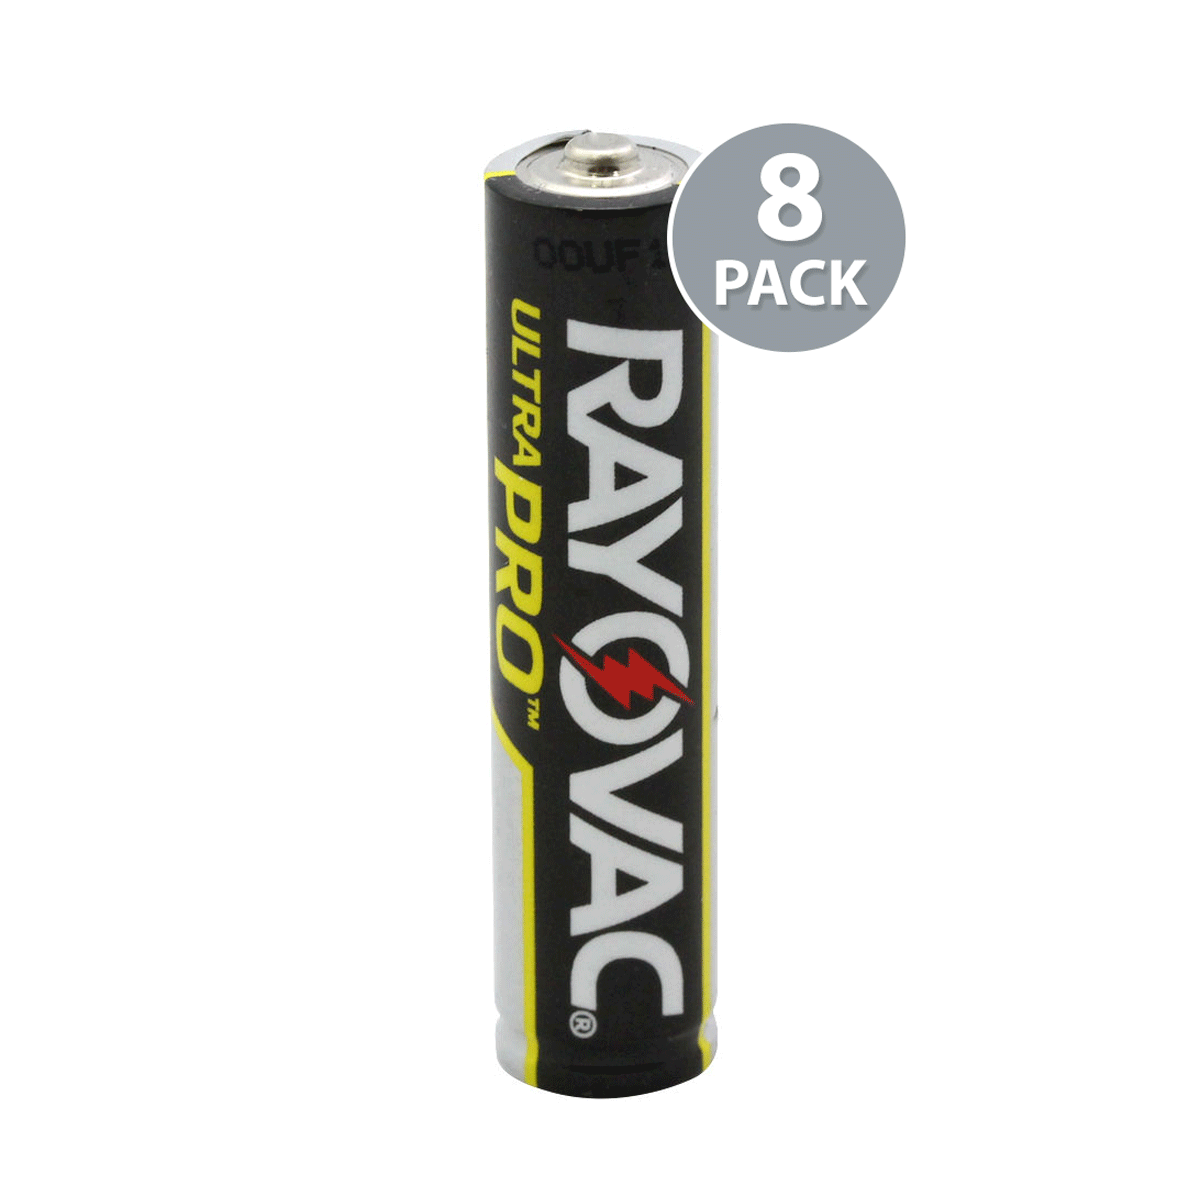   Basics 8-Pack AAA Alkaline High-Performance Batteries,  1.5 Volt, 10-Year Shelf Life : Health & Household